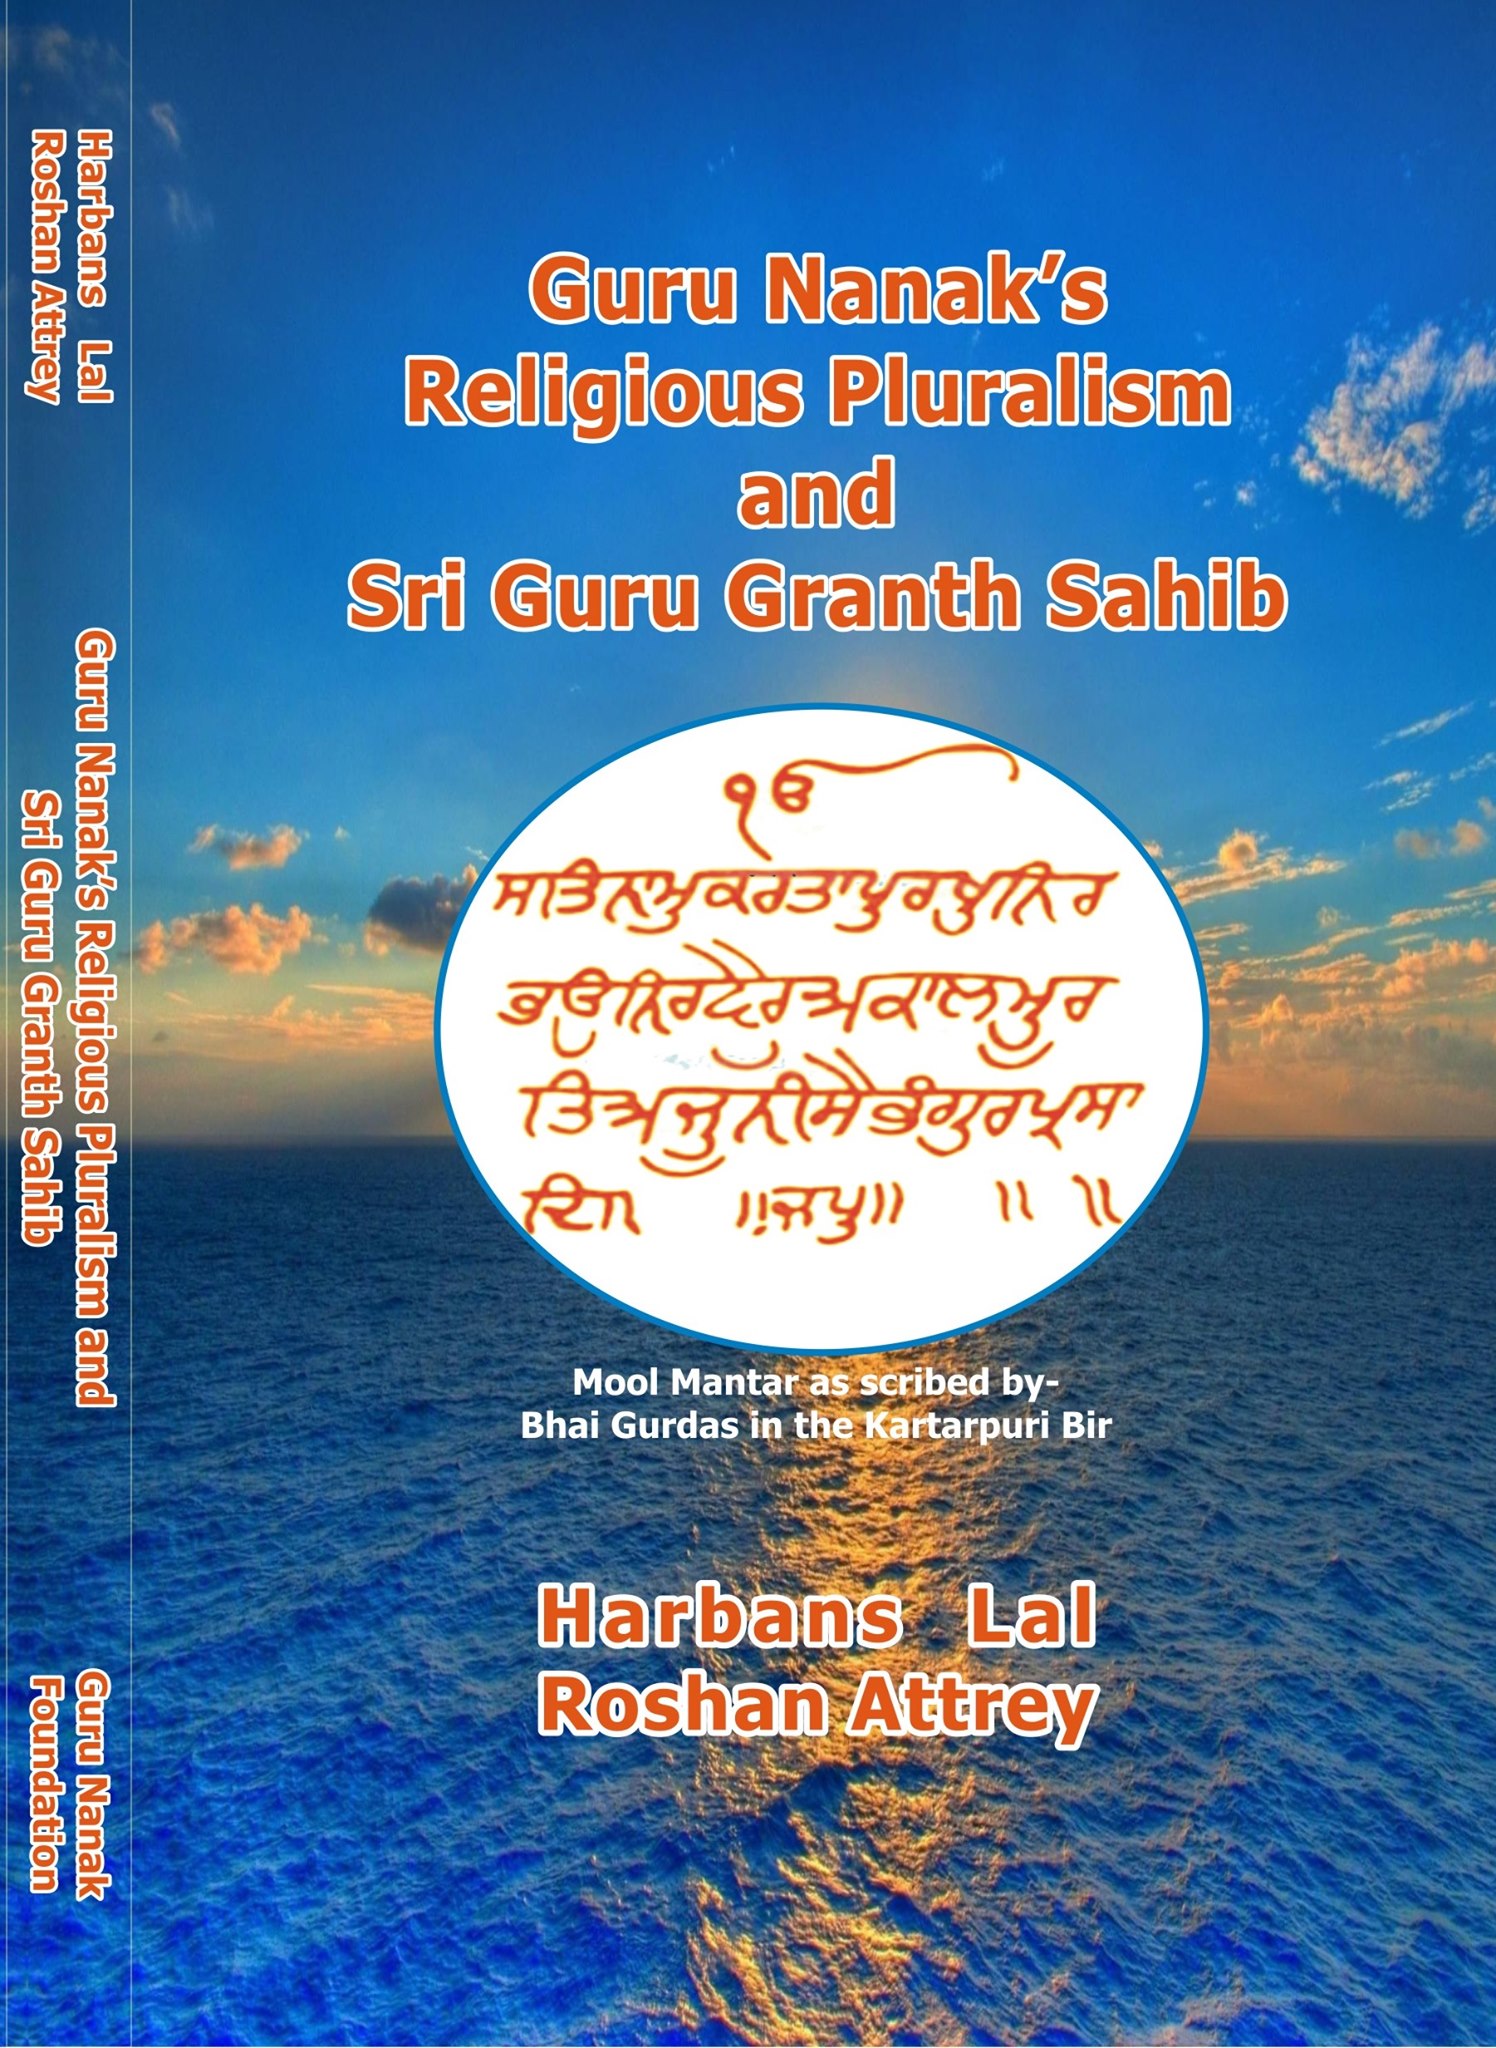 Guru Nanak's Religious Pluralism.jpg